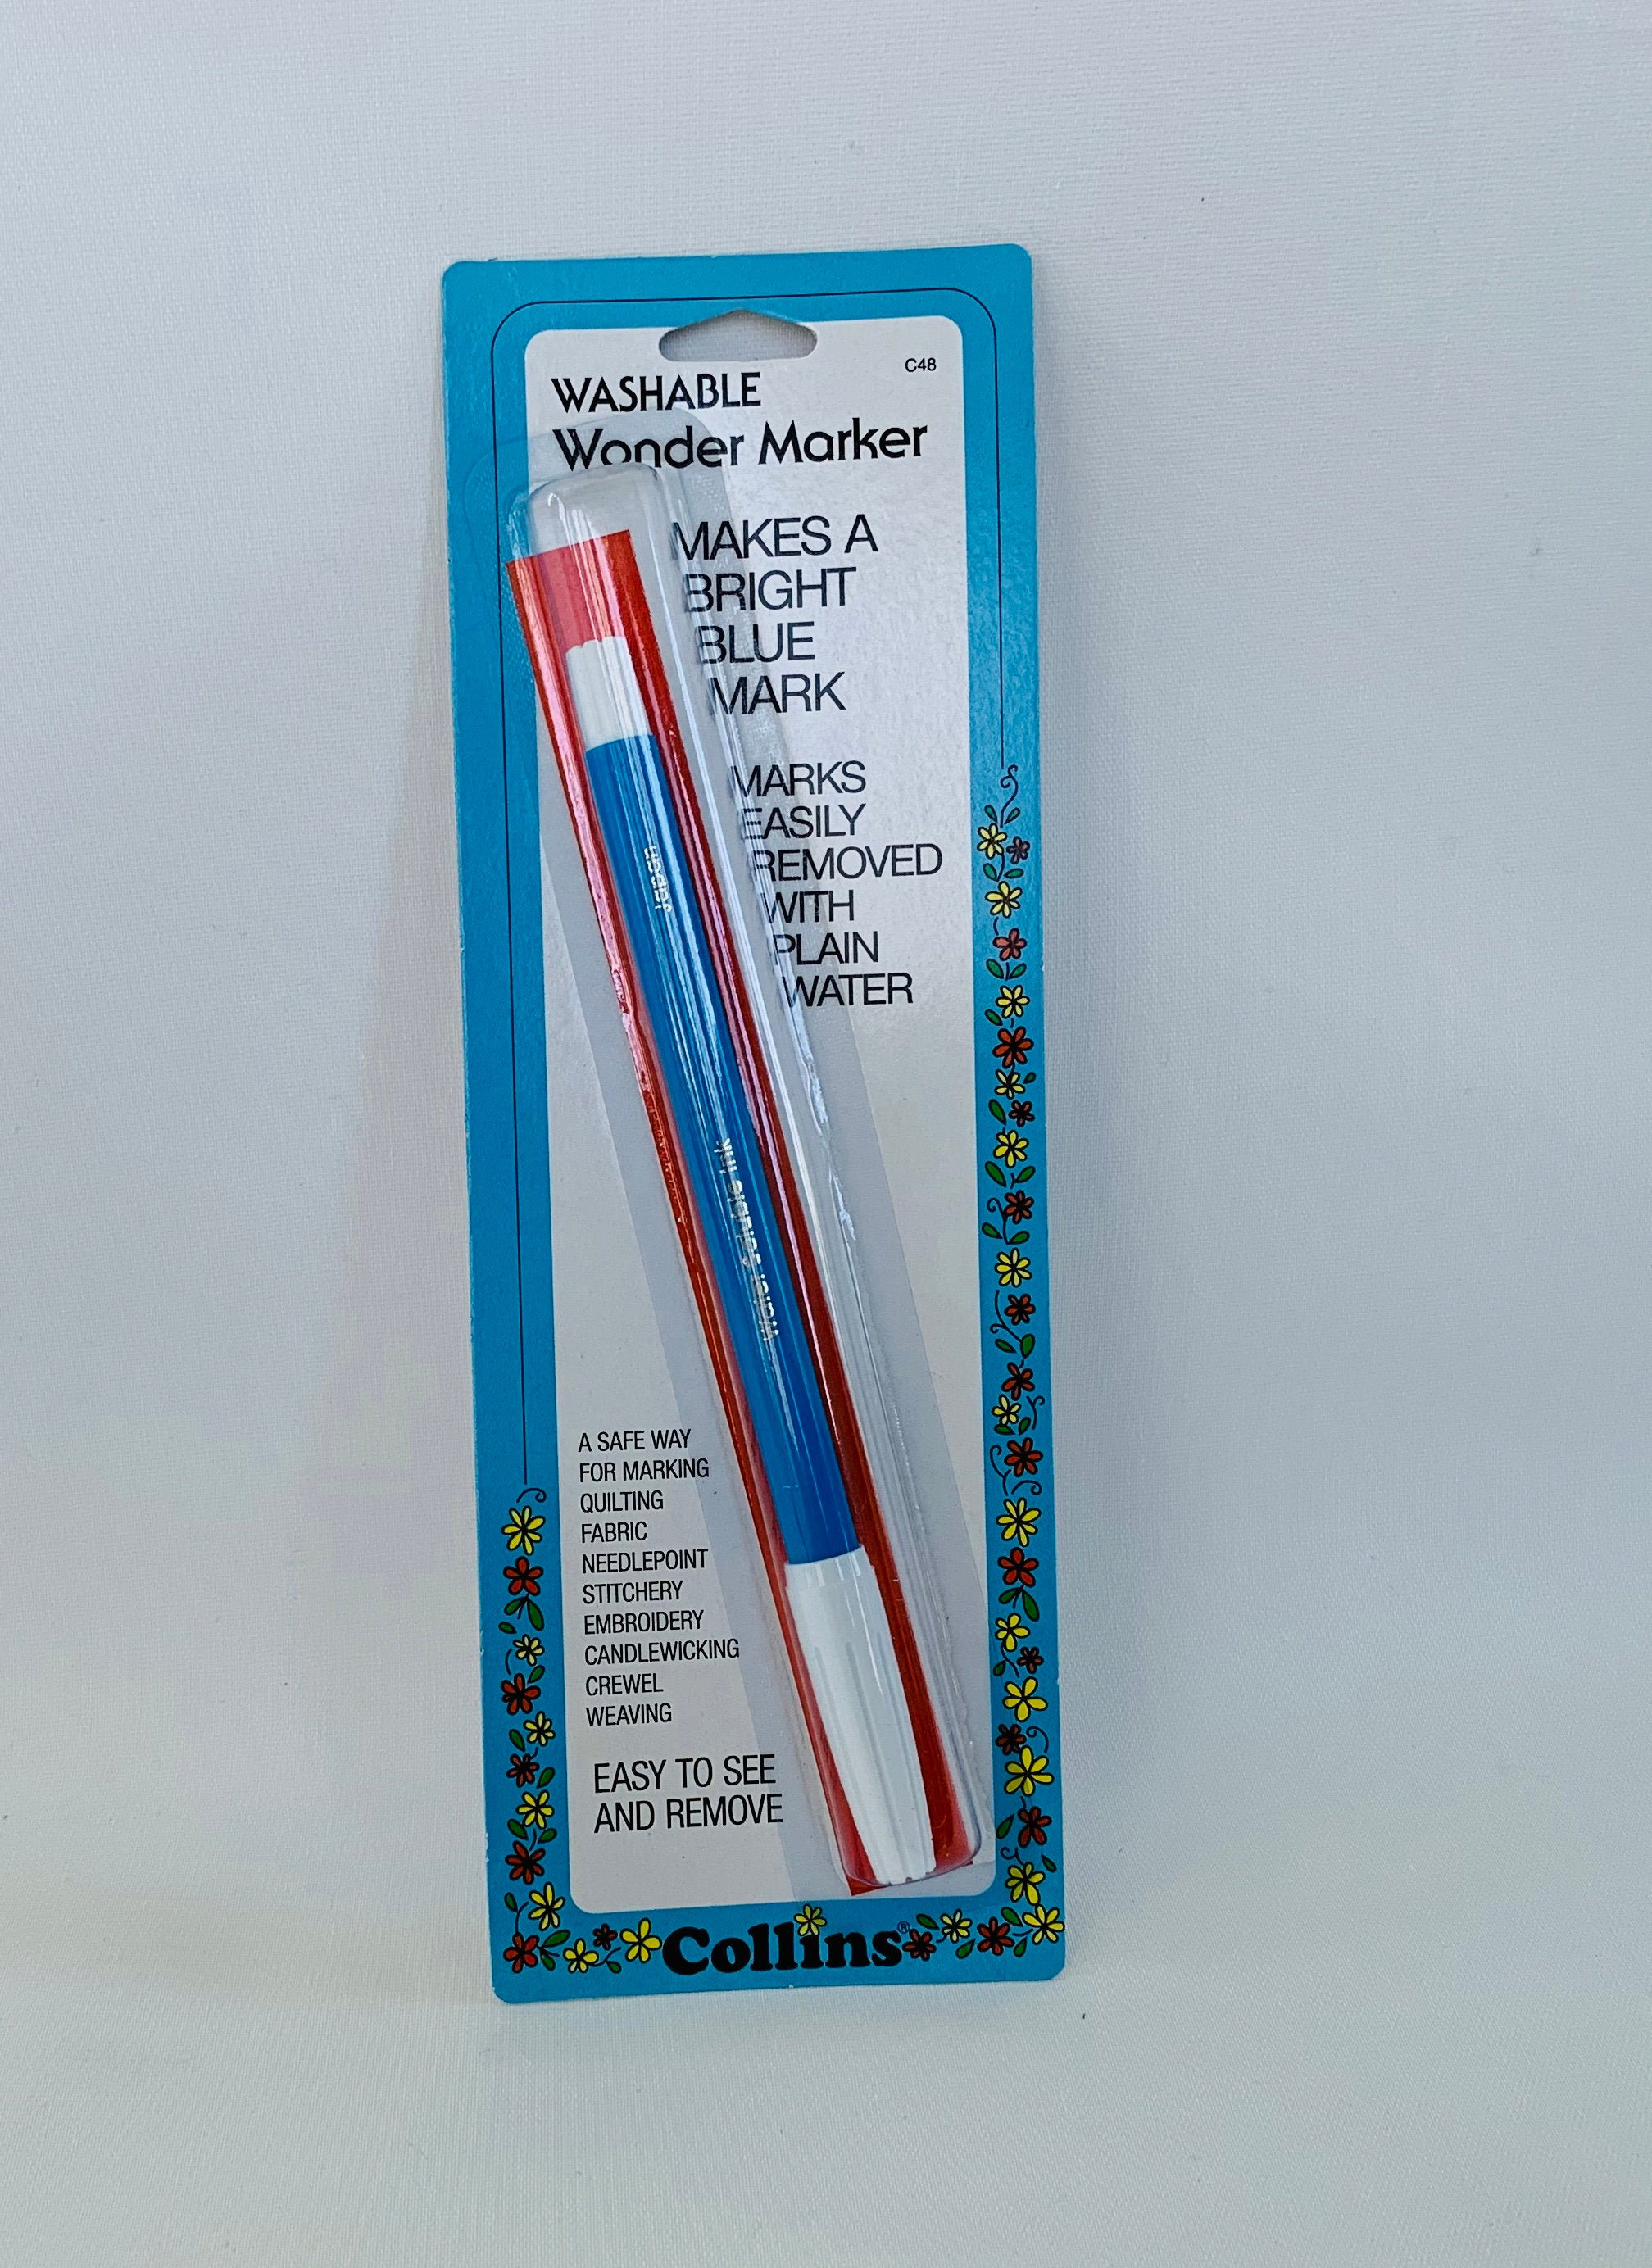 Washable wonder marker - 033262100485